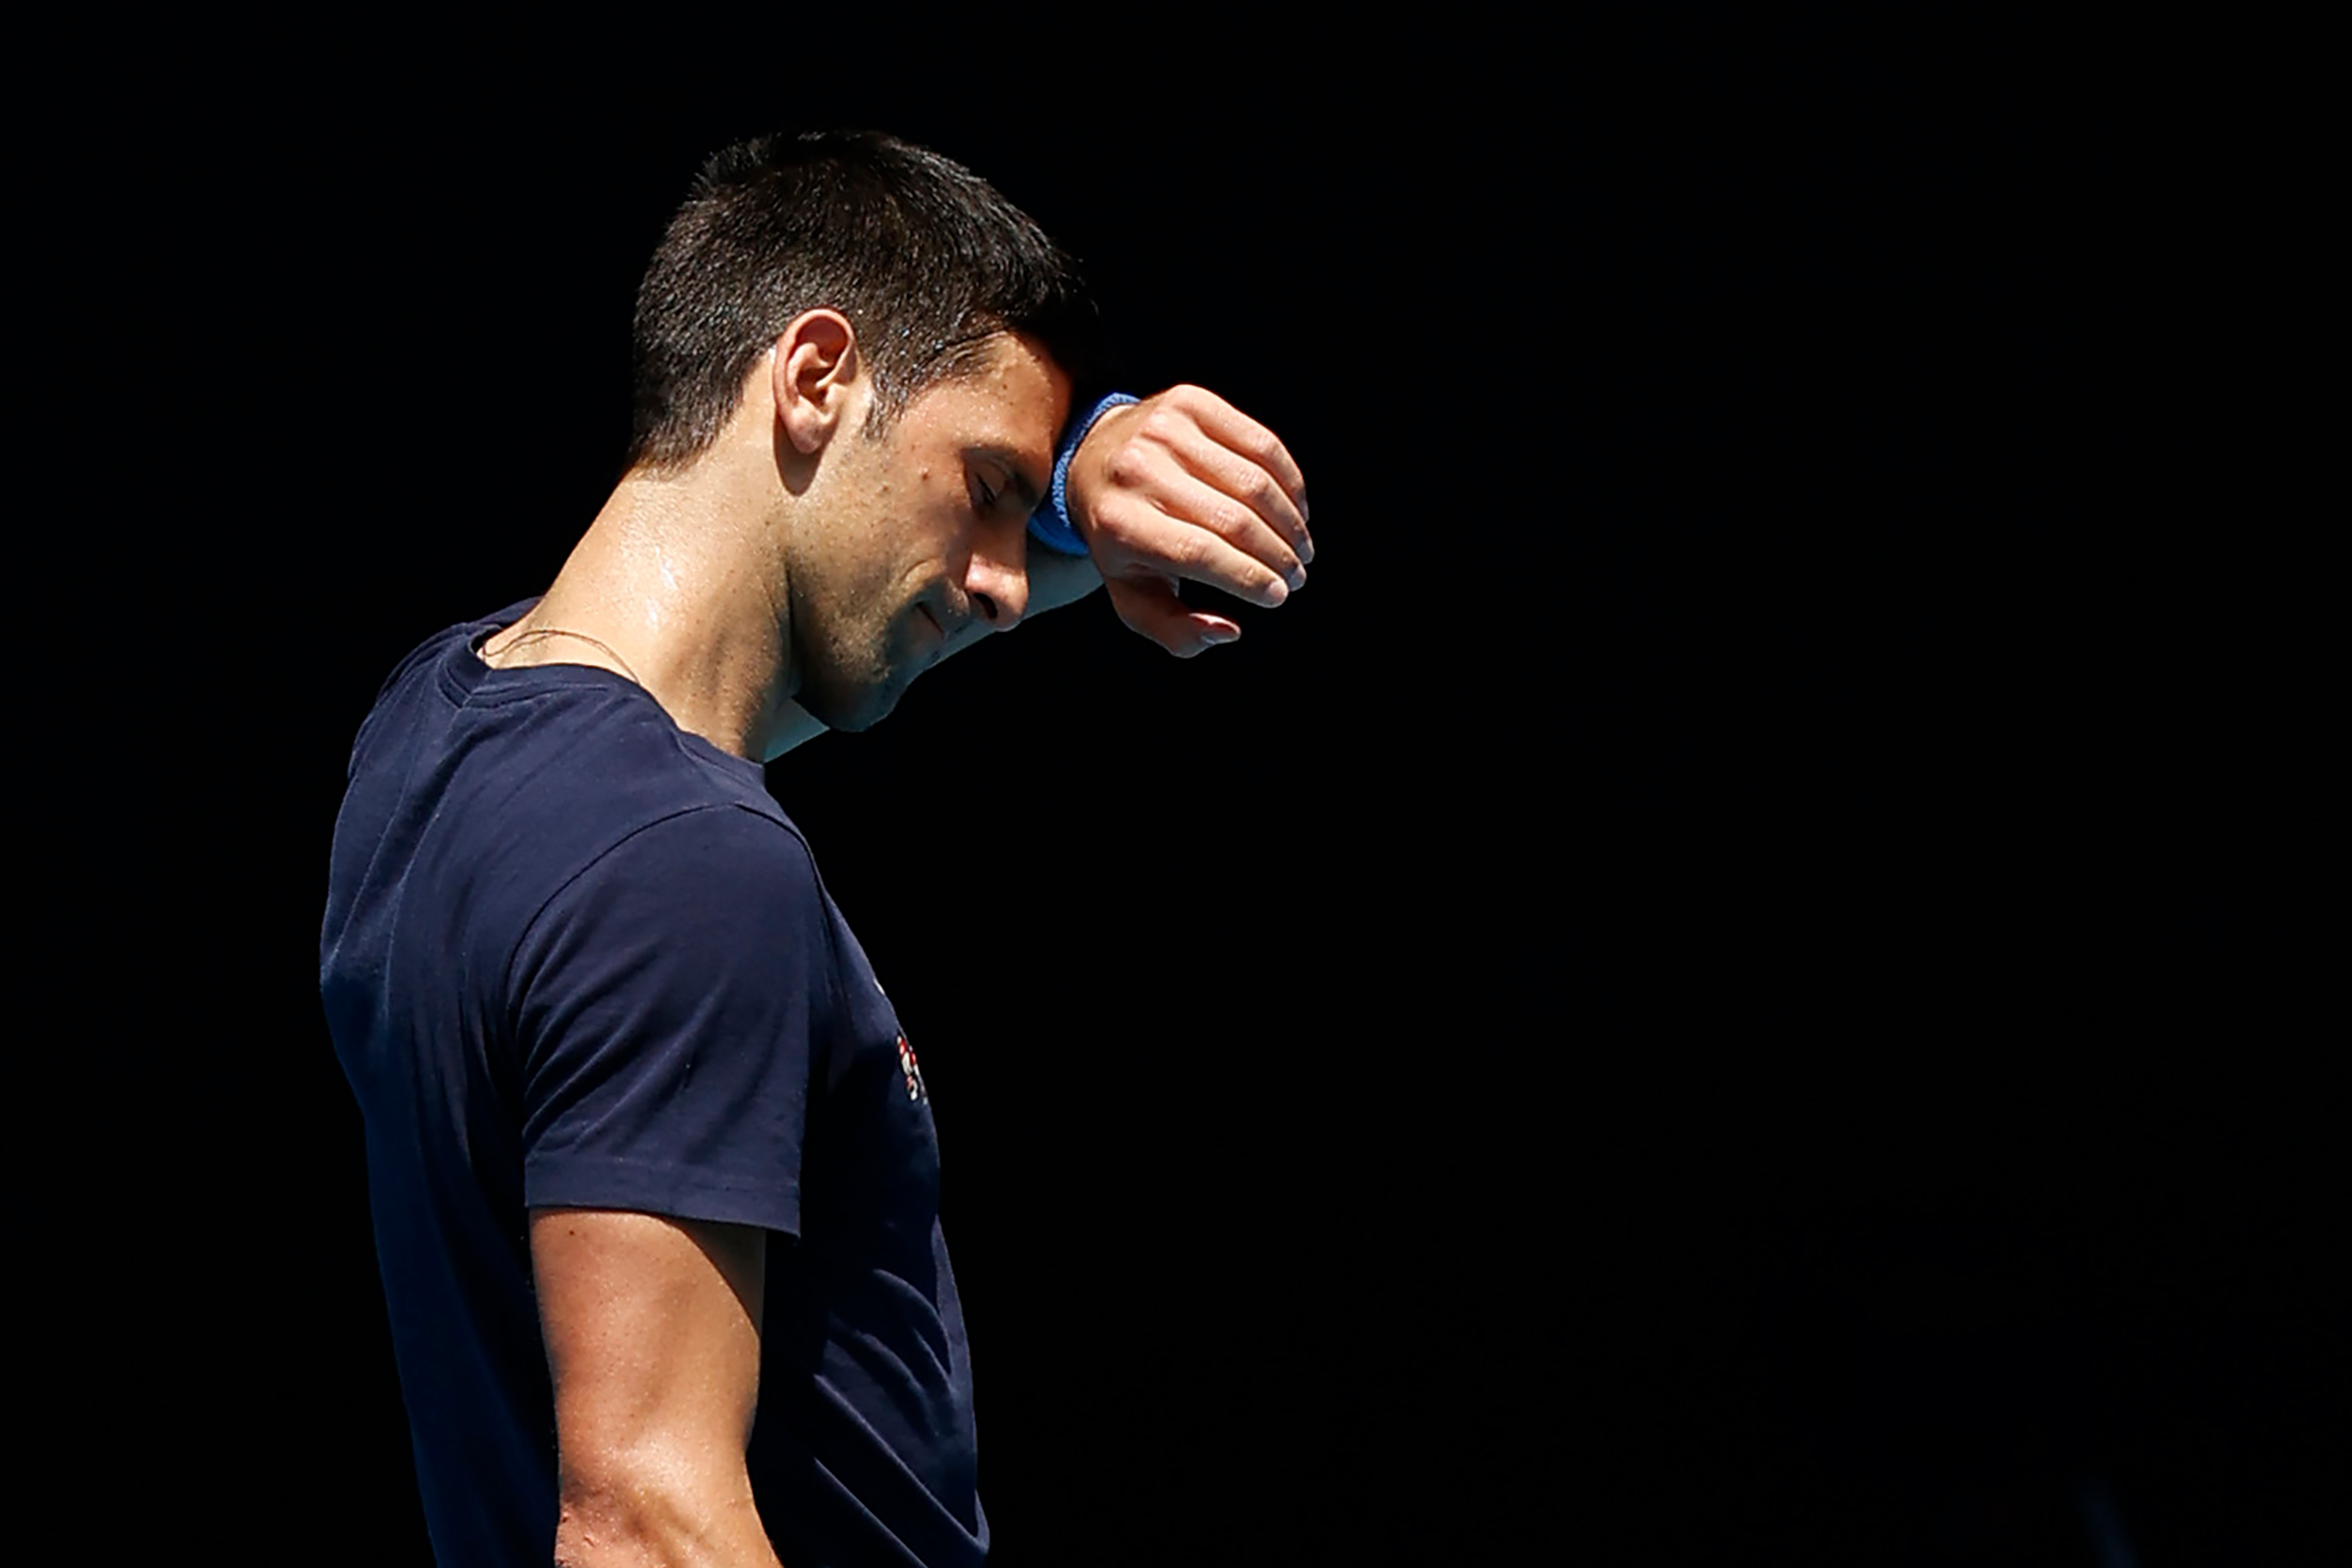 Djokovic has been detained in Australia pending a visa hearing